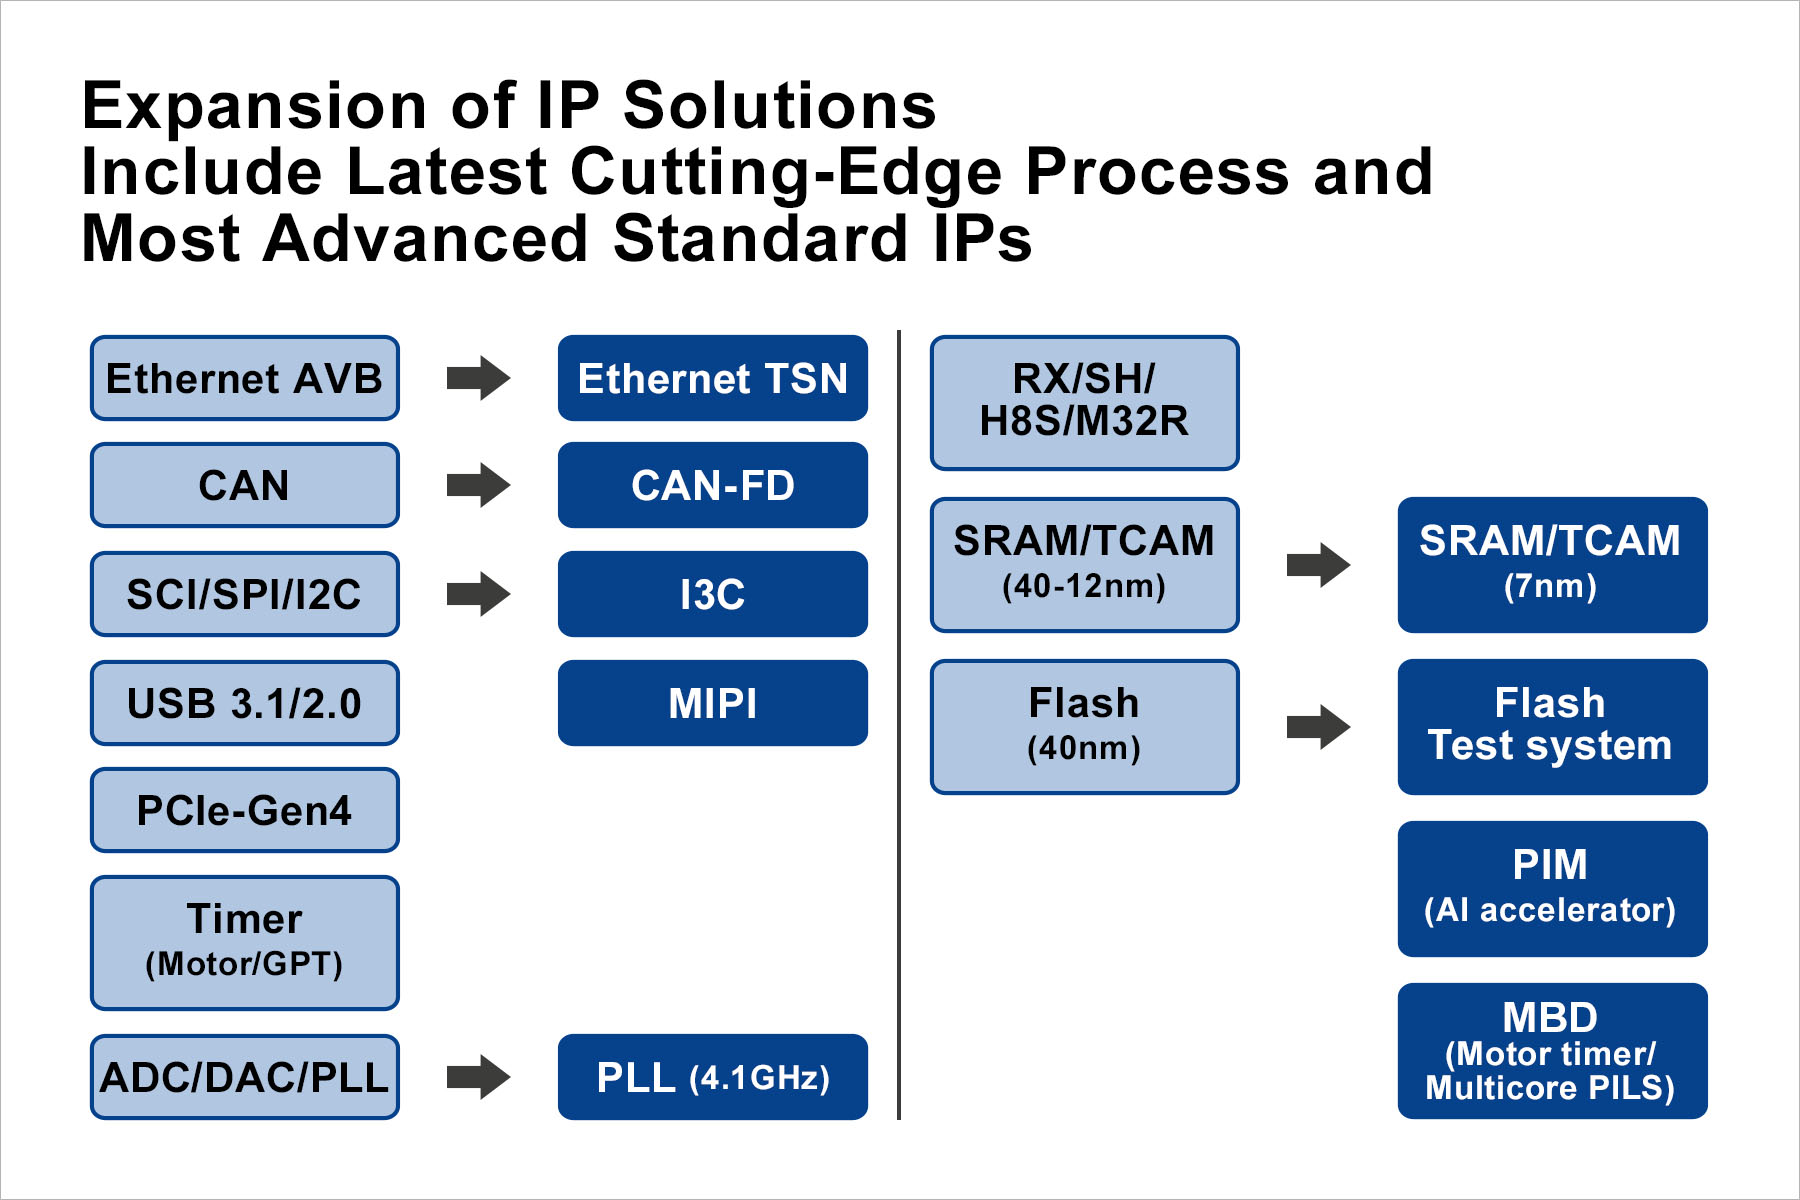 Renesas Expands Access to Portfolio of IP Licenses